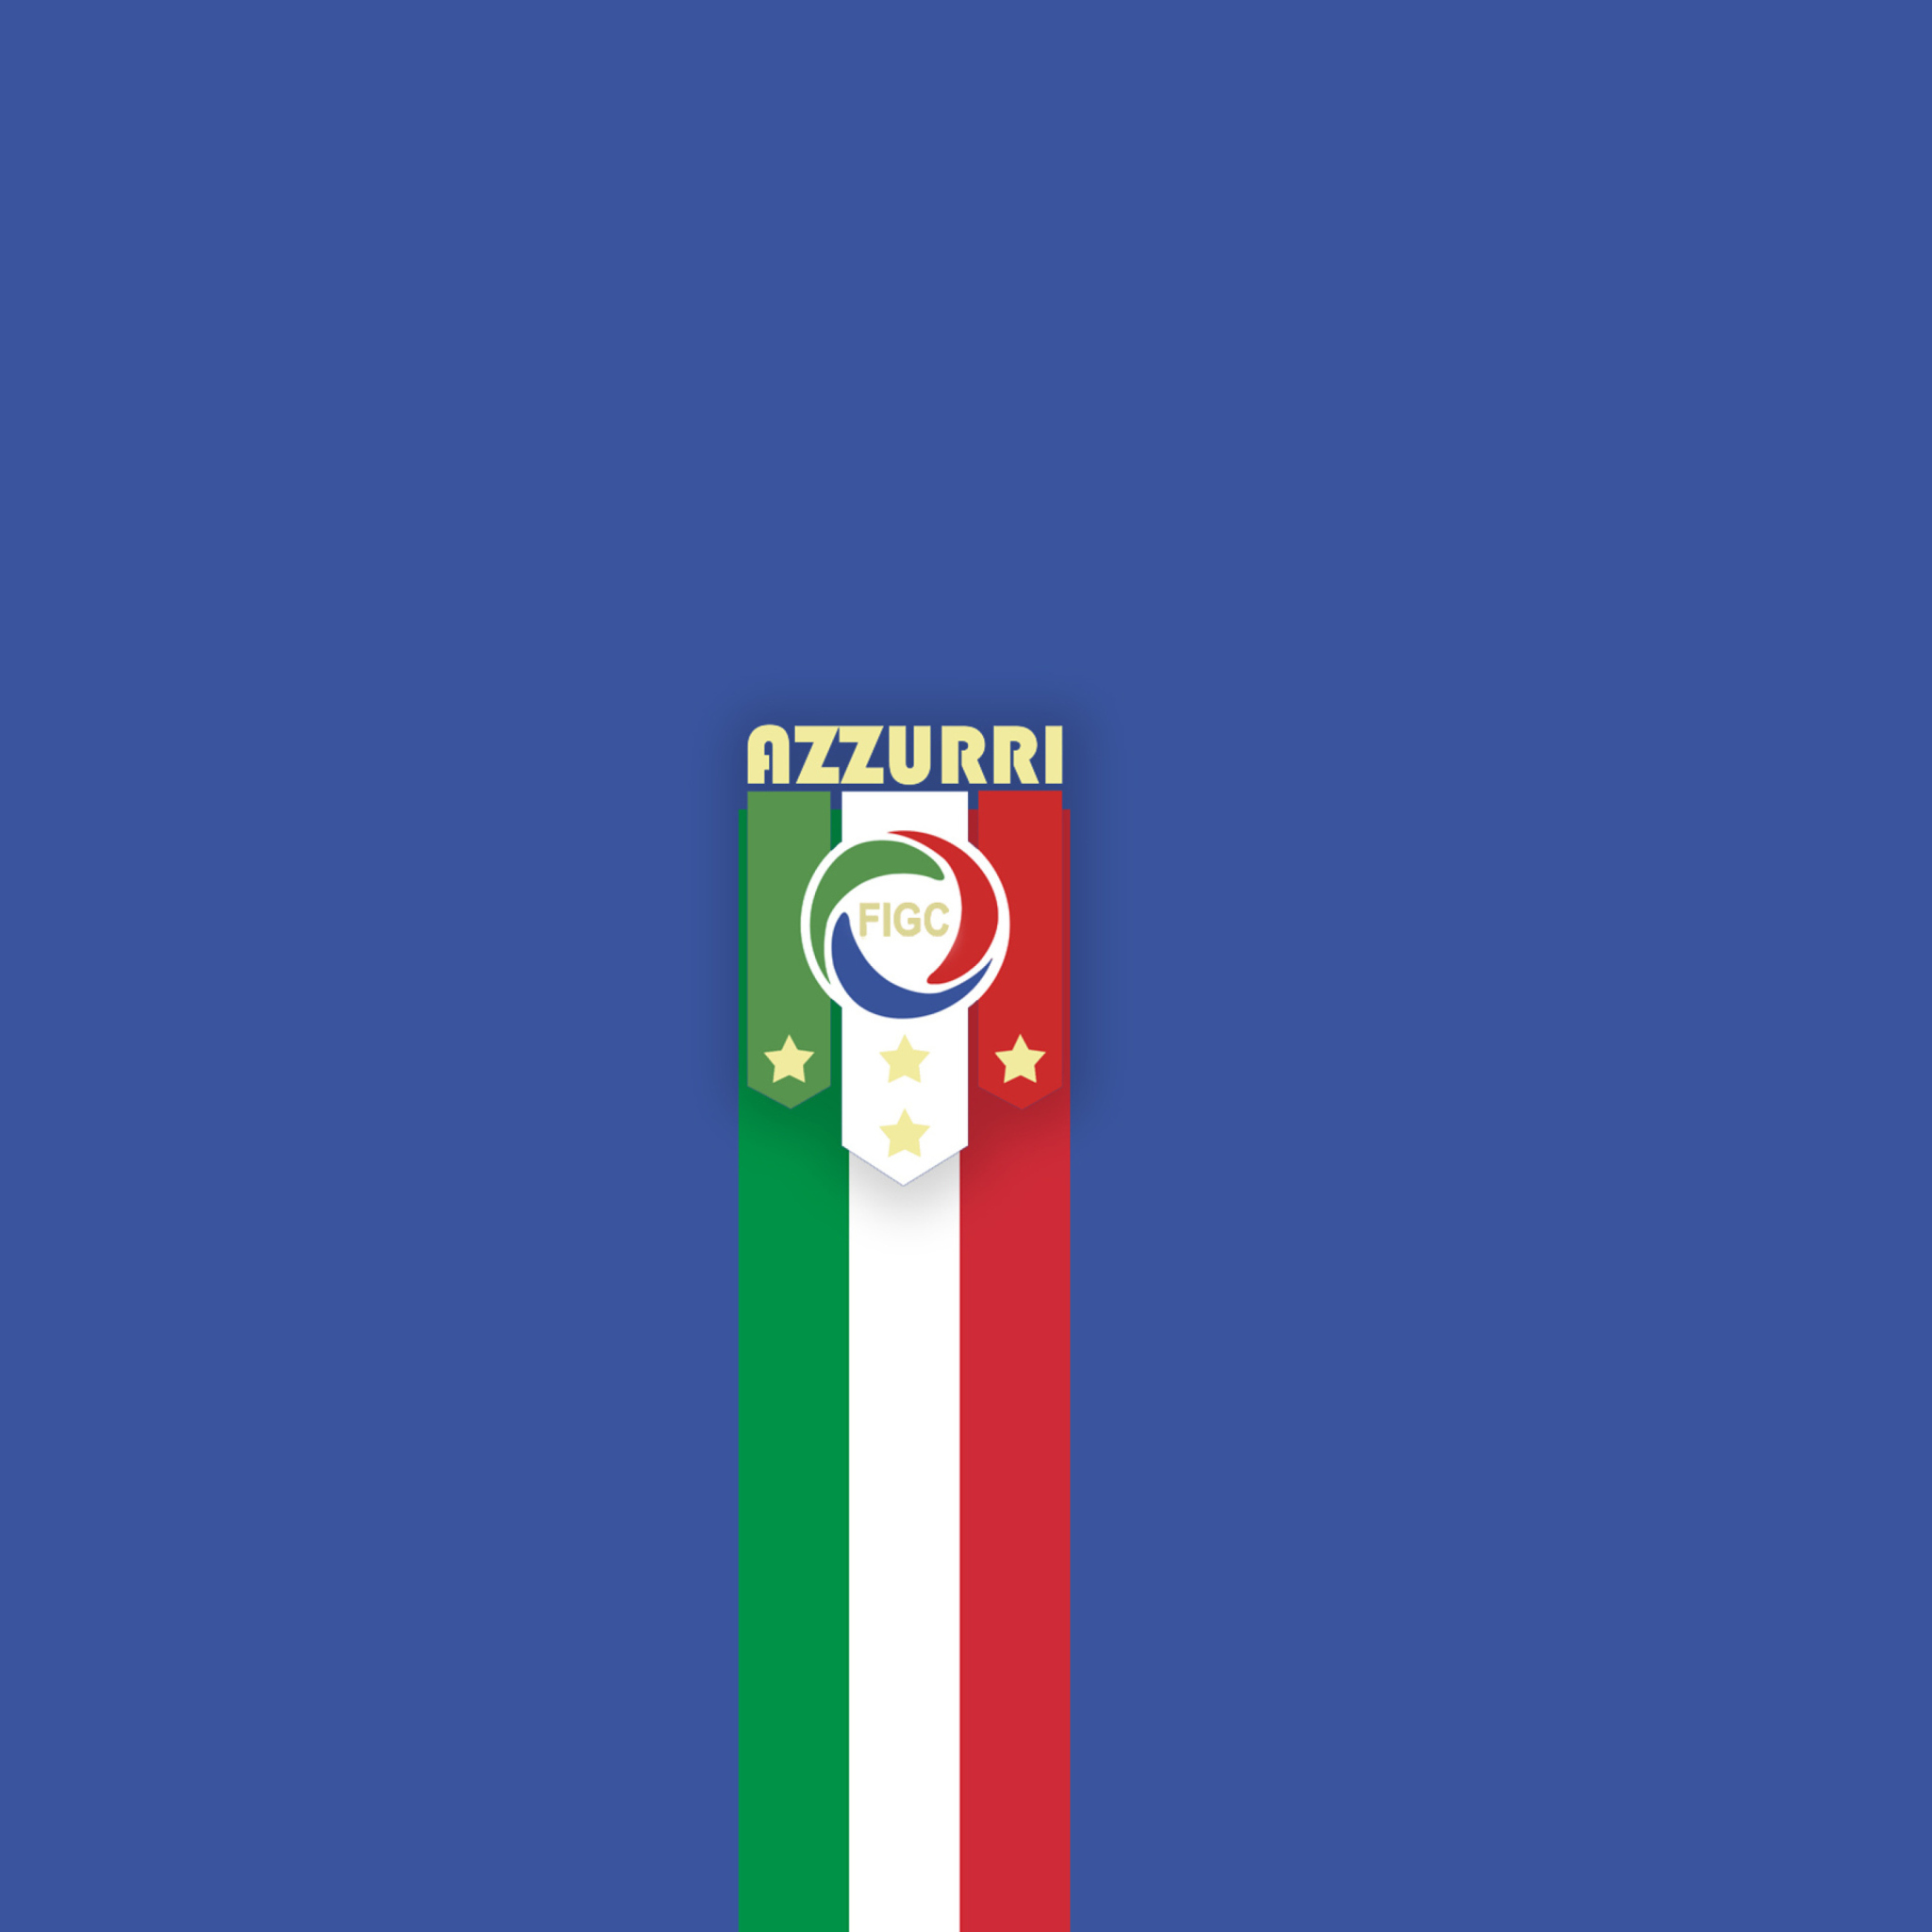 Azzurri - Italy National Team wallpaper 2048x2048